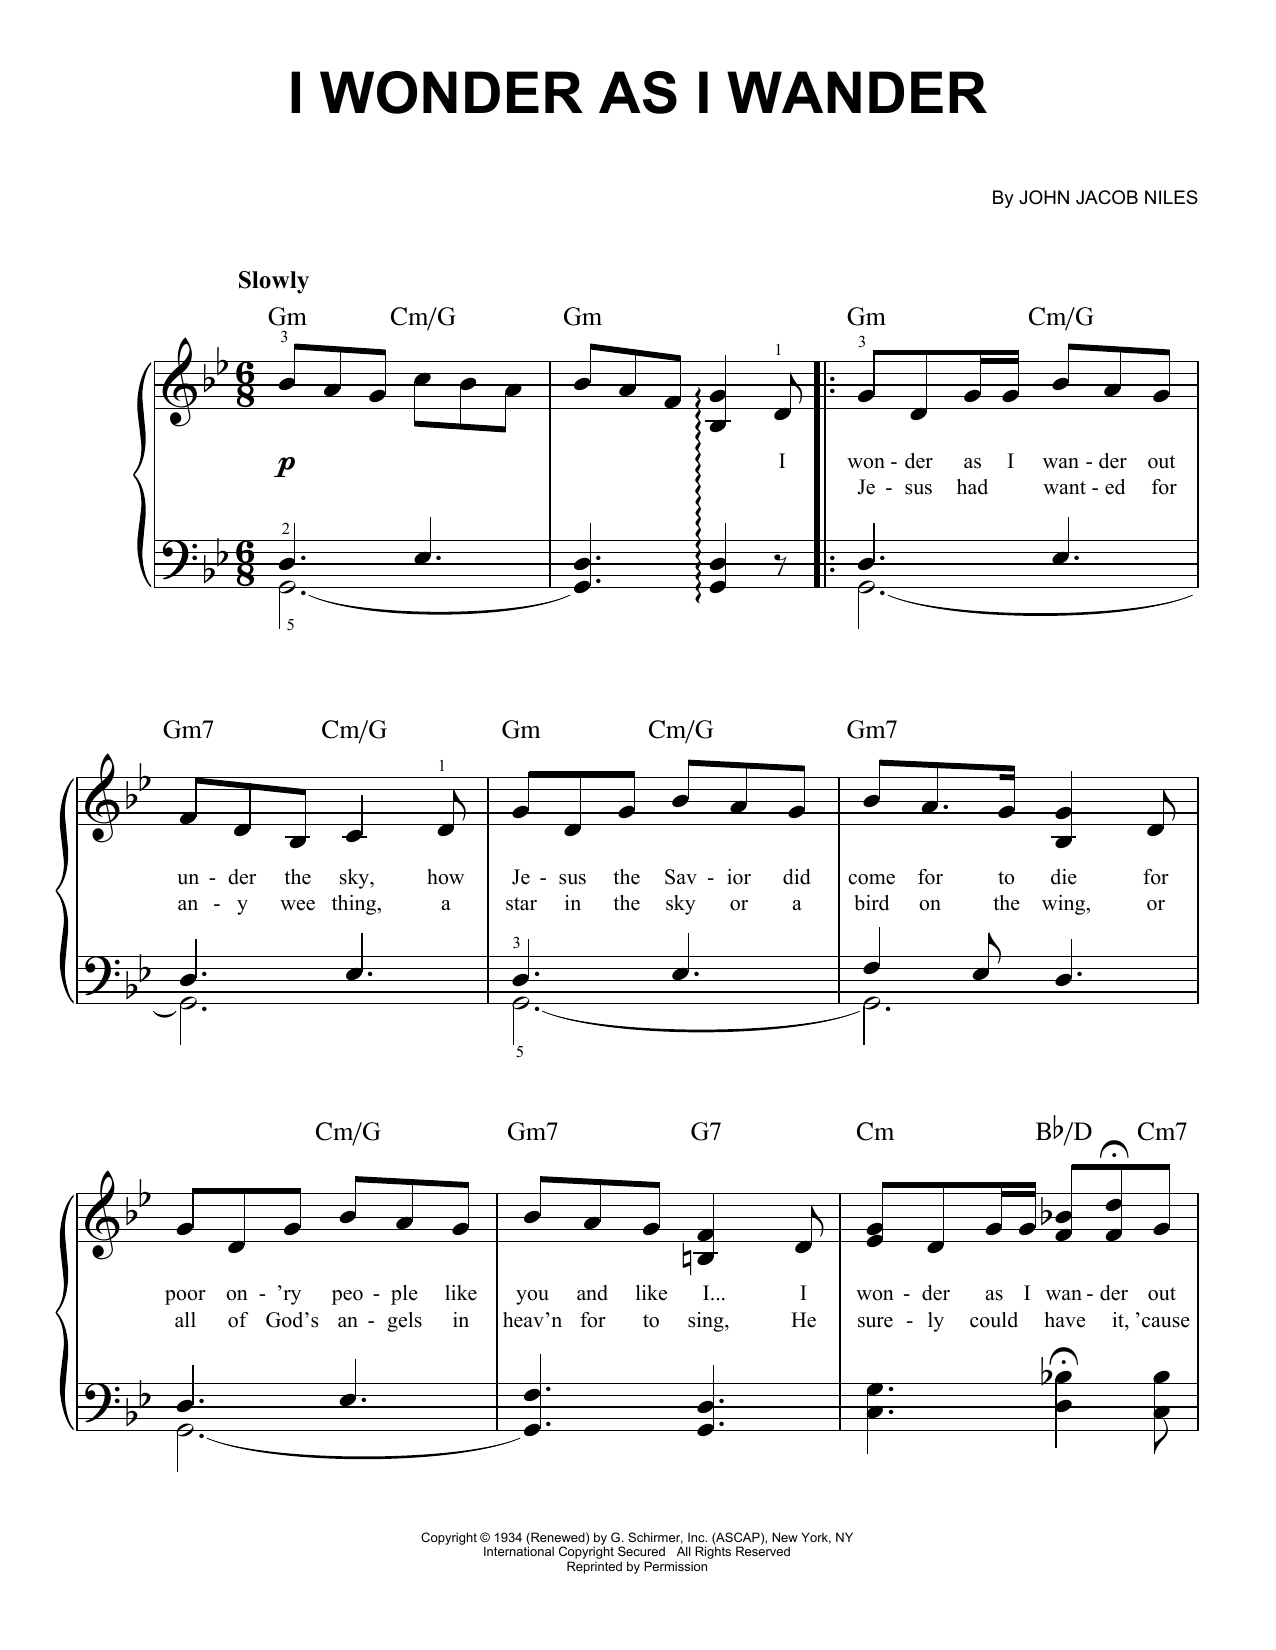 John Jacob Niles I Wonder As I Wander Sheet Music Notes & Chords for Piano - Download or Print PDF